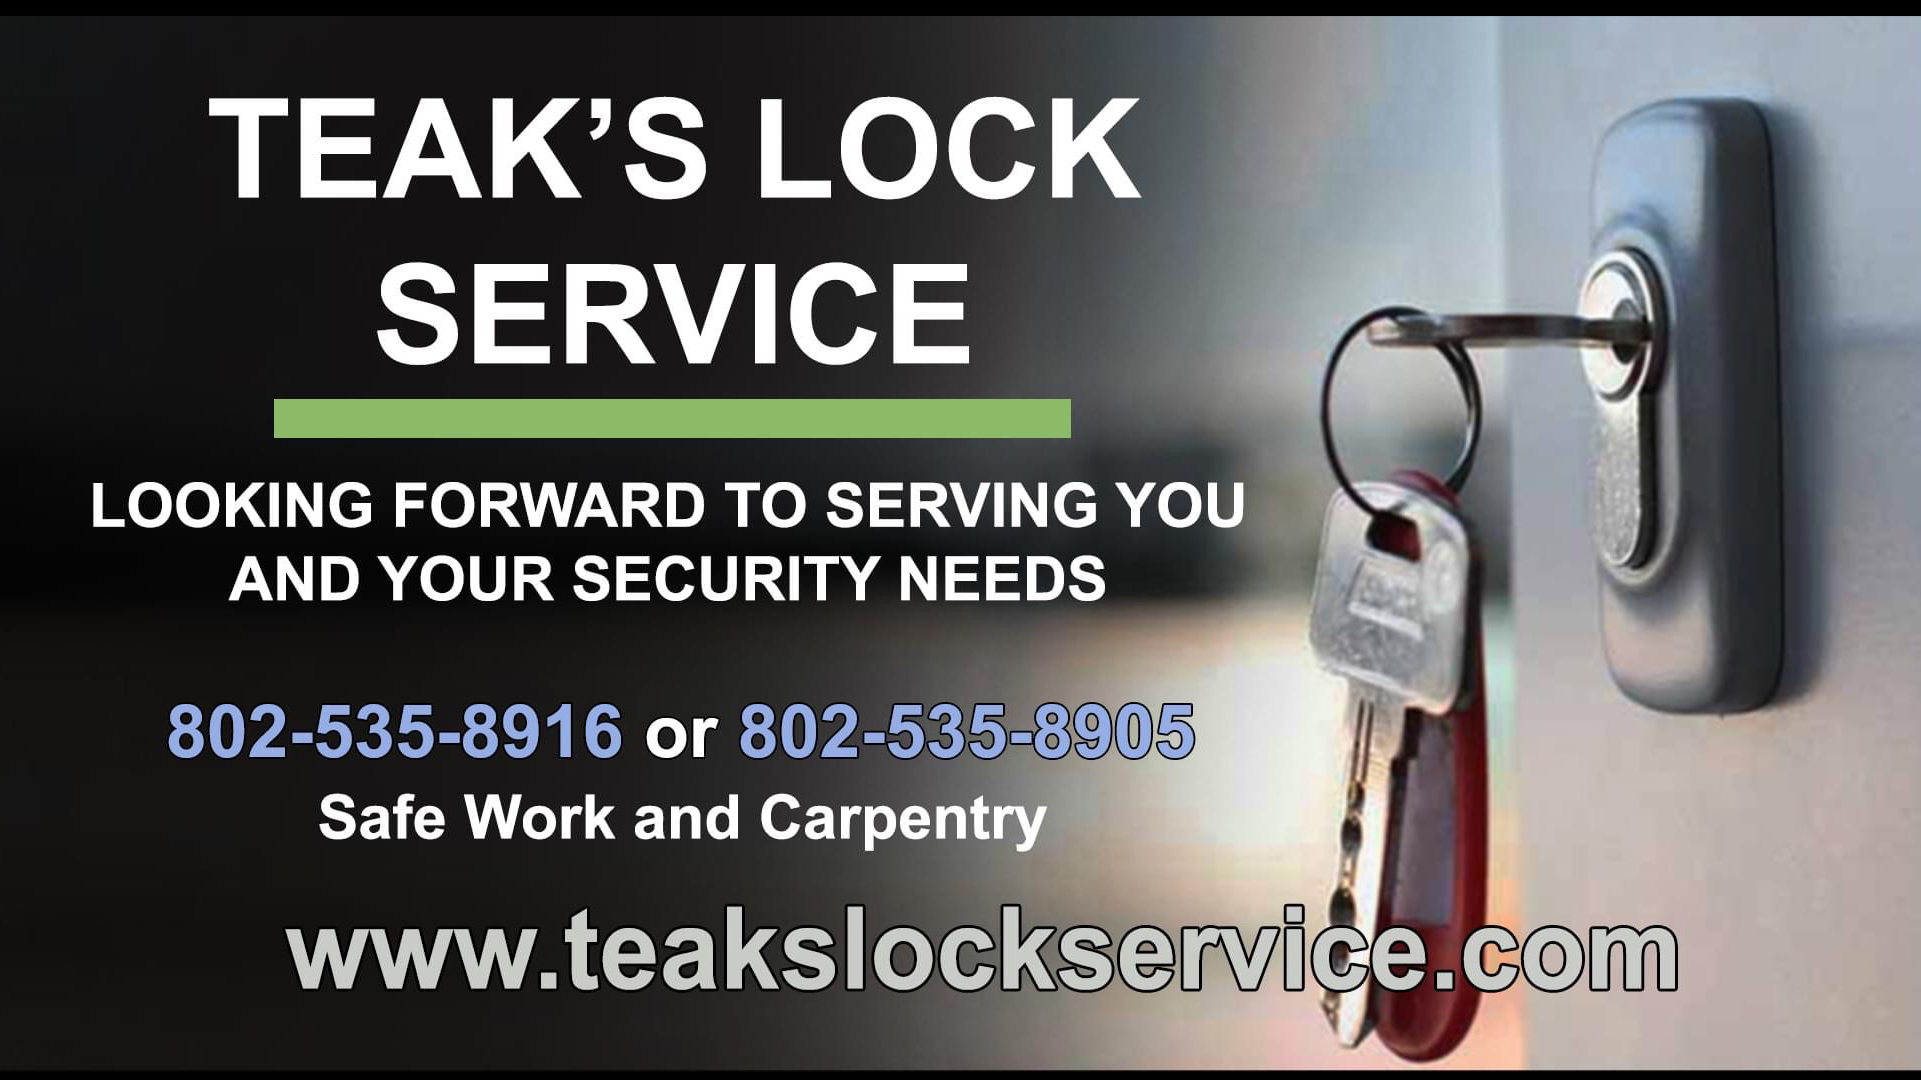 Teak's Lock Service 457 Leroux Rd, Lyndonville Vermont 05851